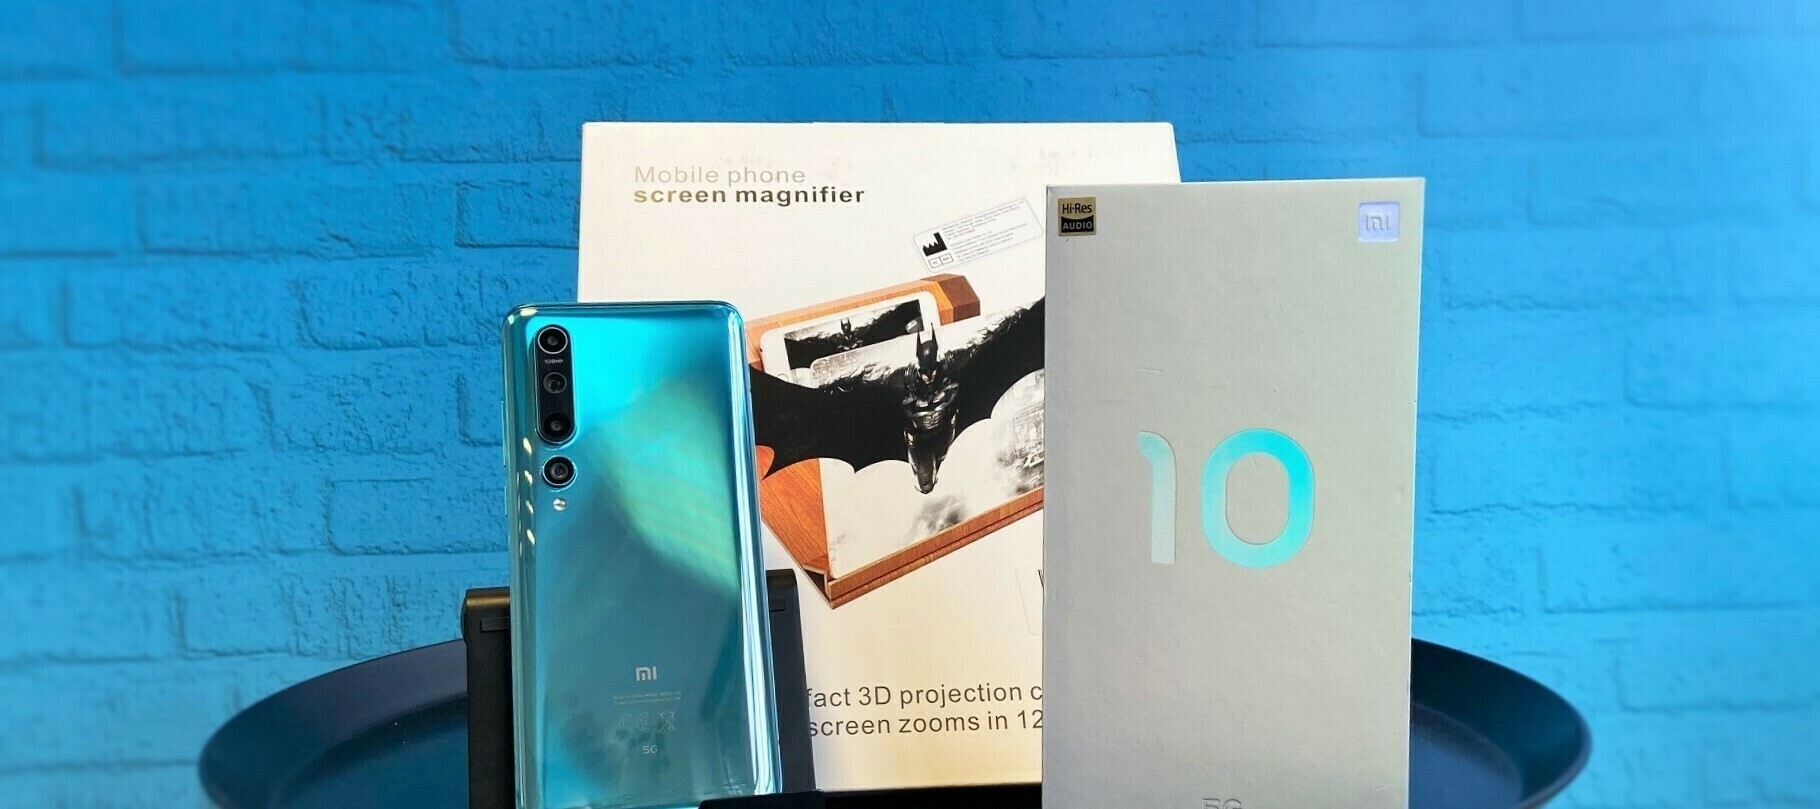 Xiaomi Mi 10 & Mobilephone Screen Magnifier - Tester*innen gesucht.